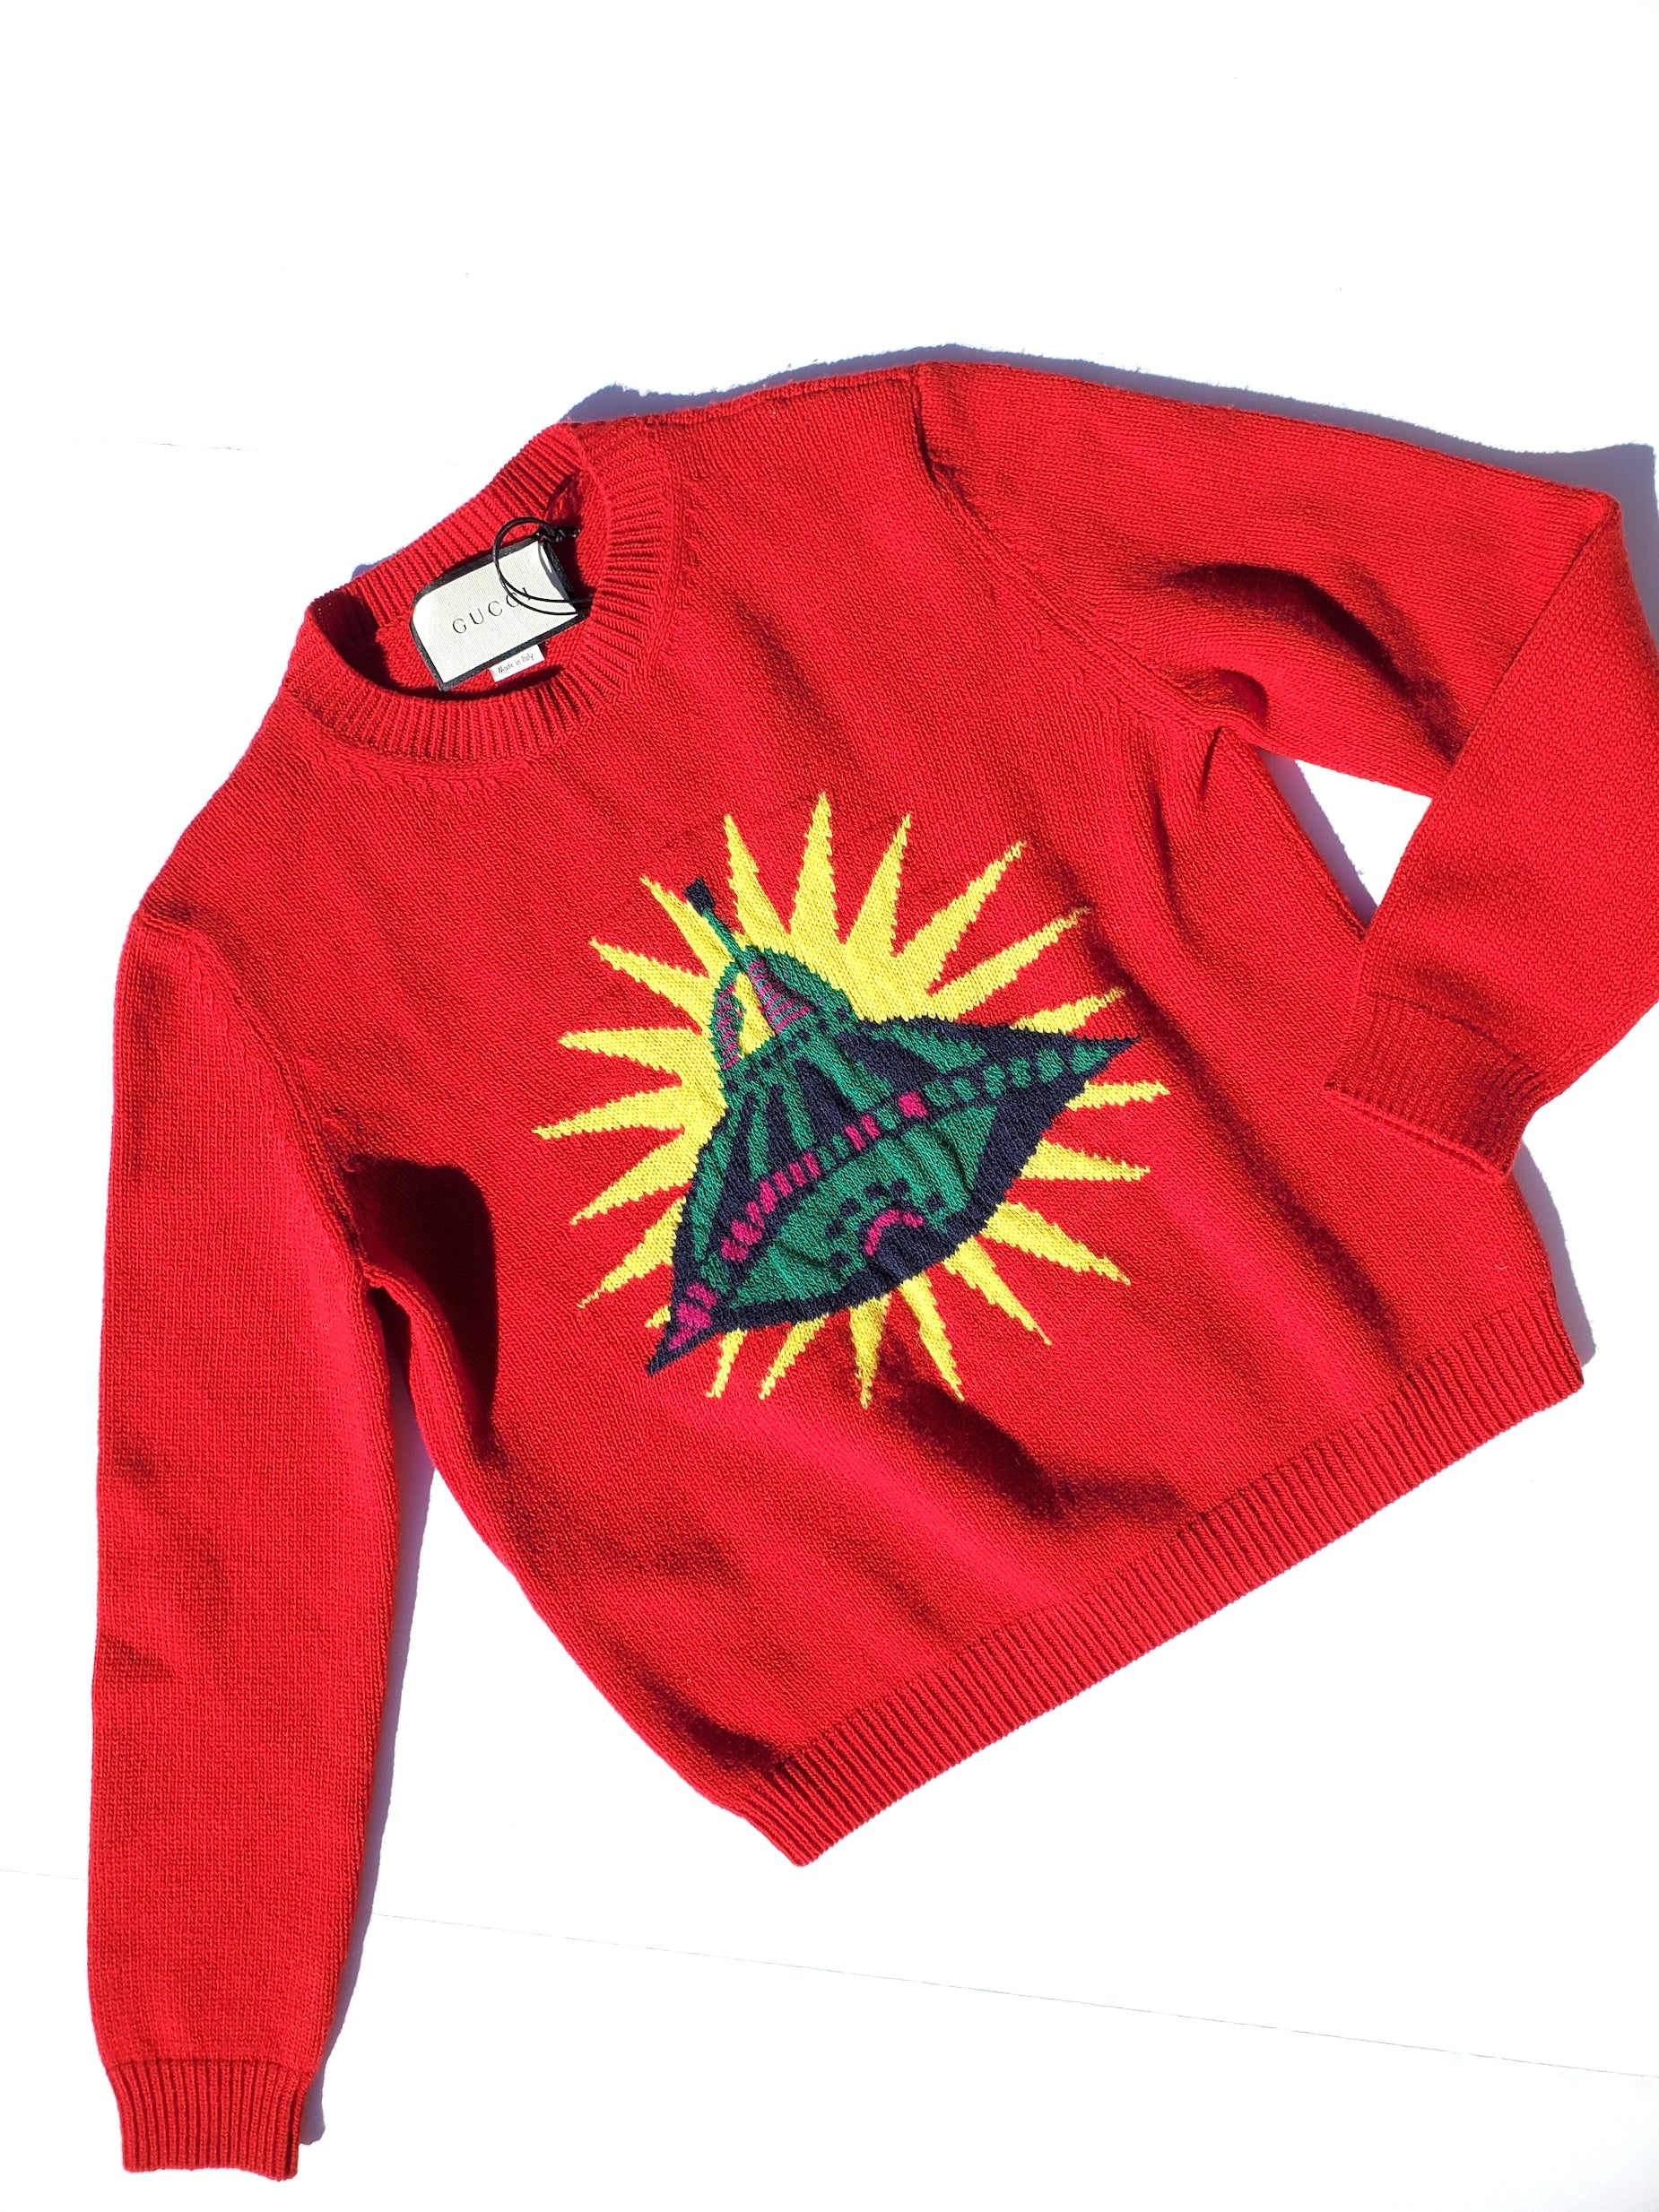 New Gucci 2017 Red UFO Intarsia Printed Wool Sweater S